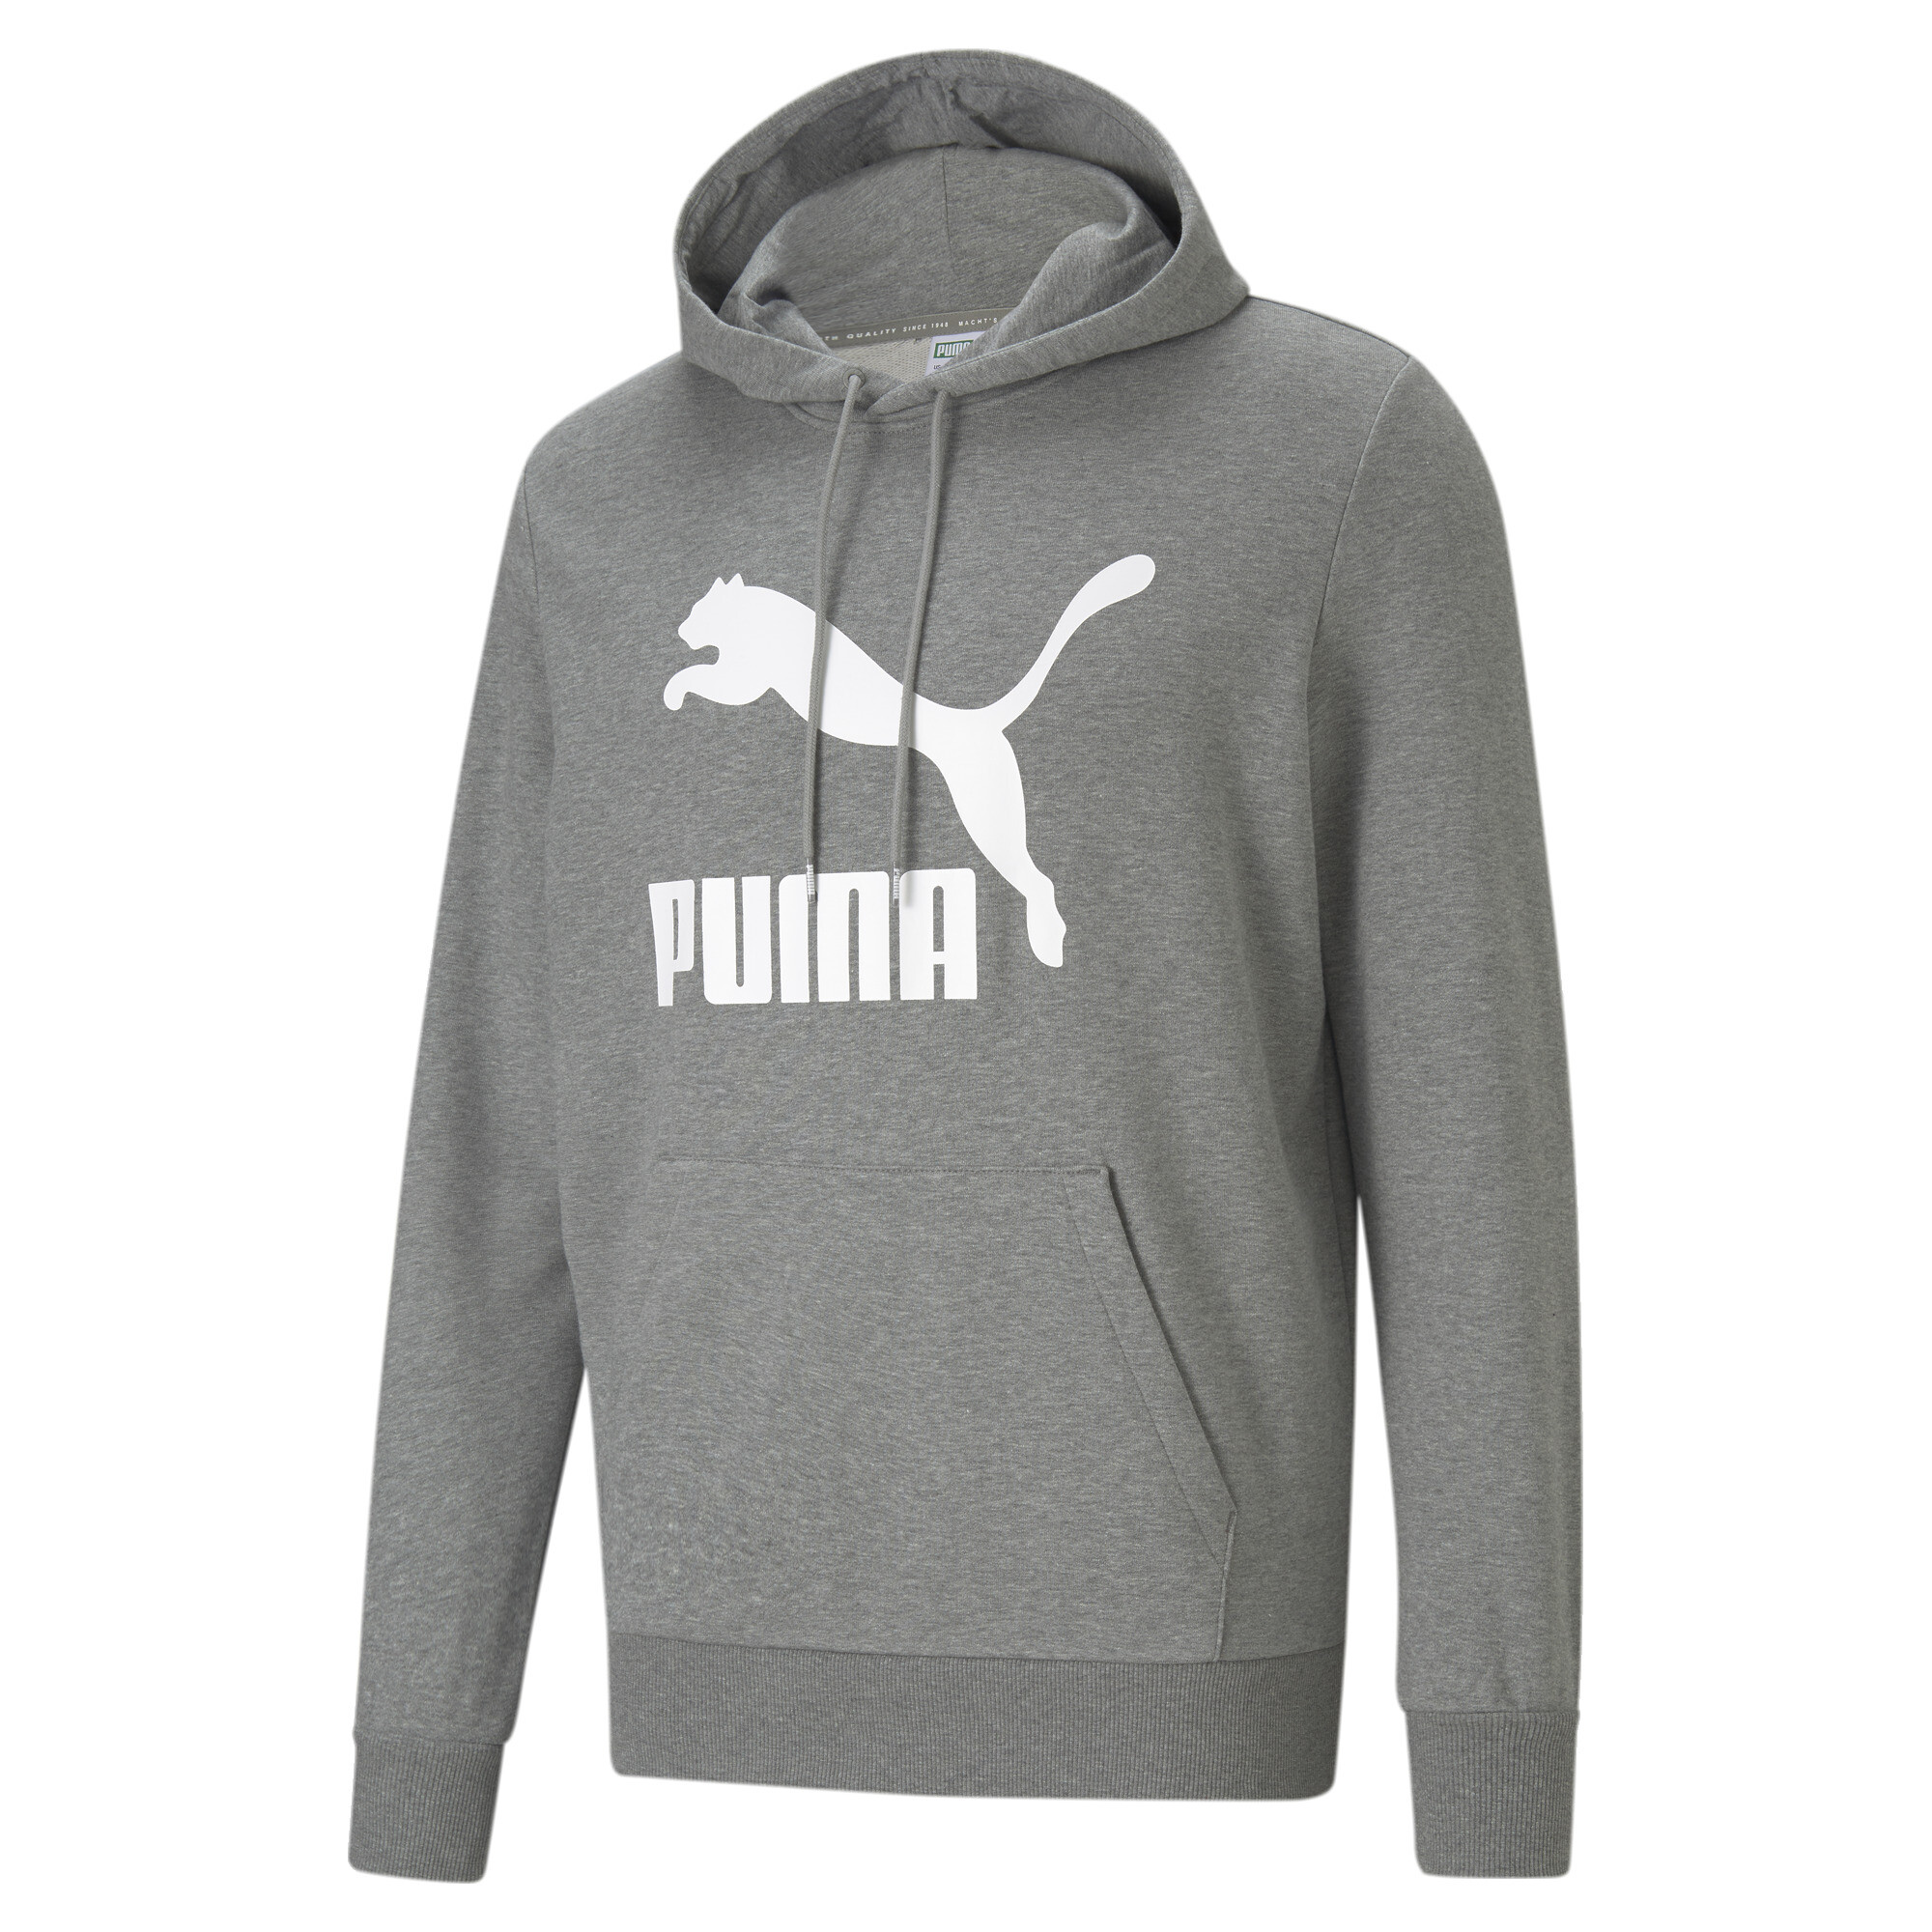 Men's Puma Classics's Logo Hoodie, Gray, Size XL, Clothing